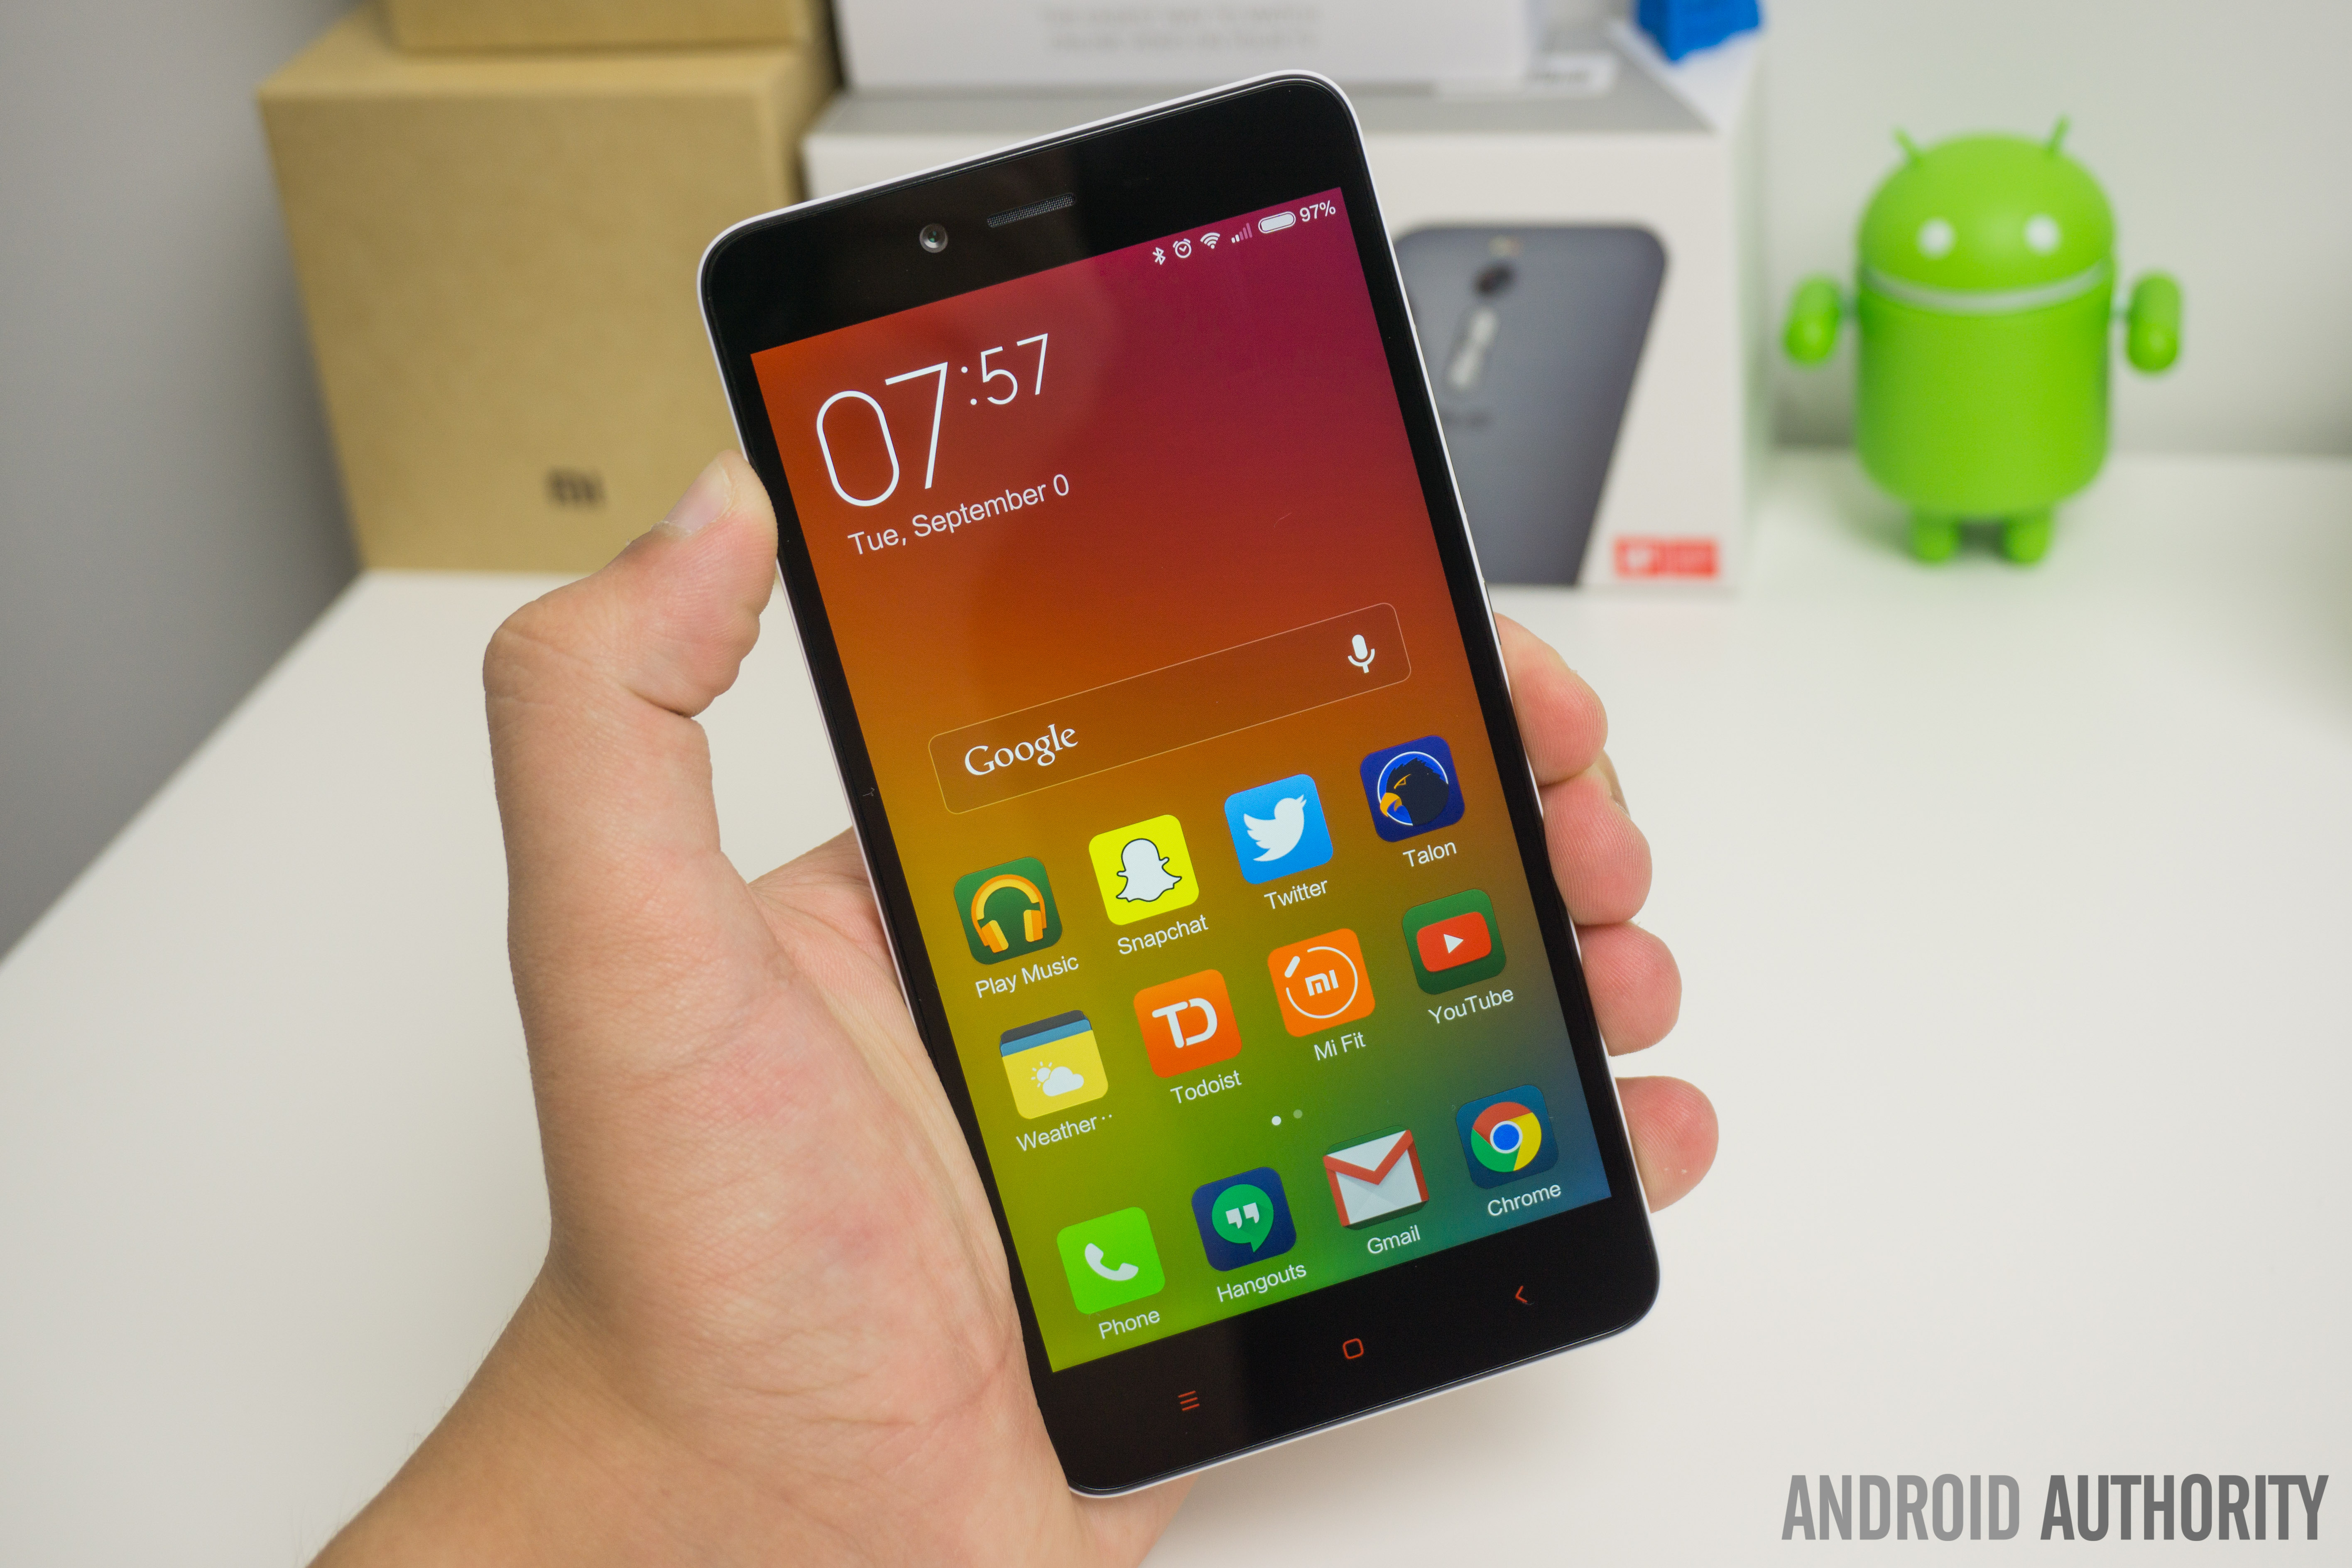 Xiaomi Redmi Note 2 16gb Характеристика